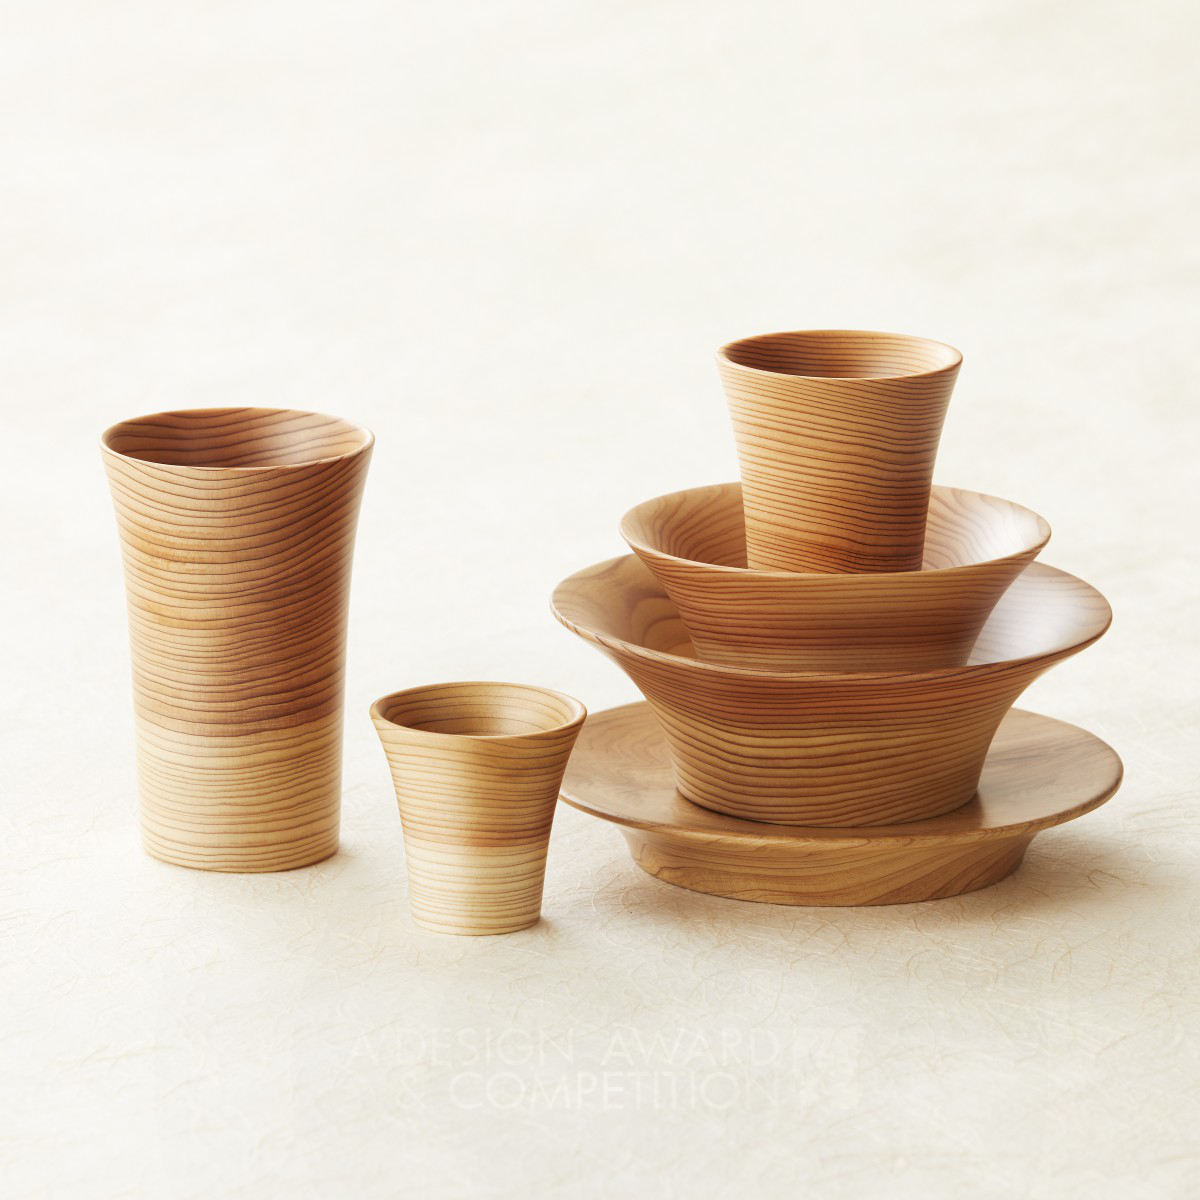 Kamiyama SHIZQ Project Wooden Tableware by Kiyoharu Hirose